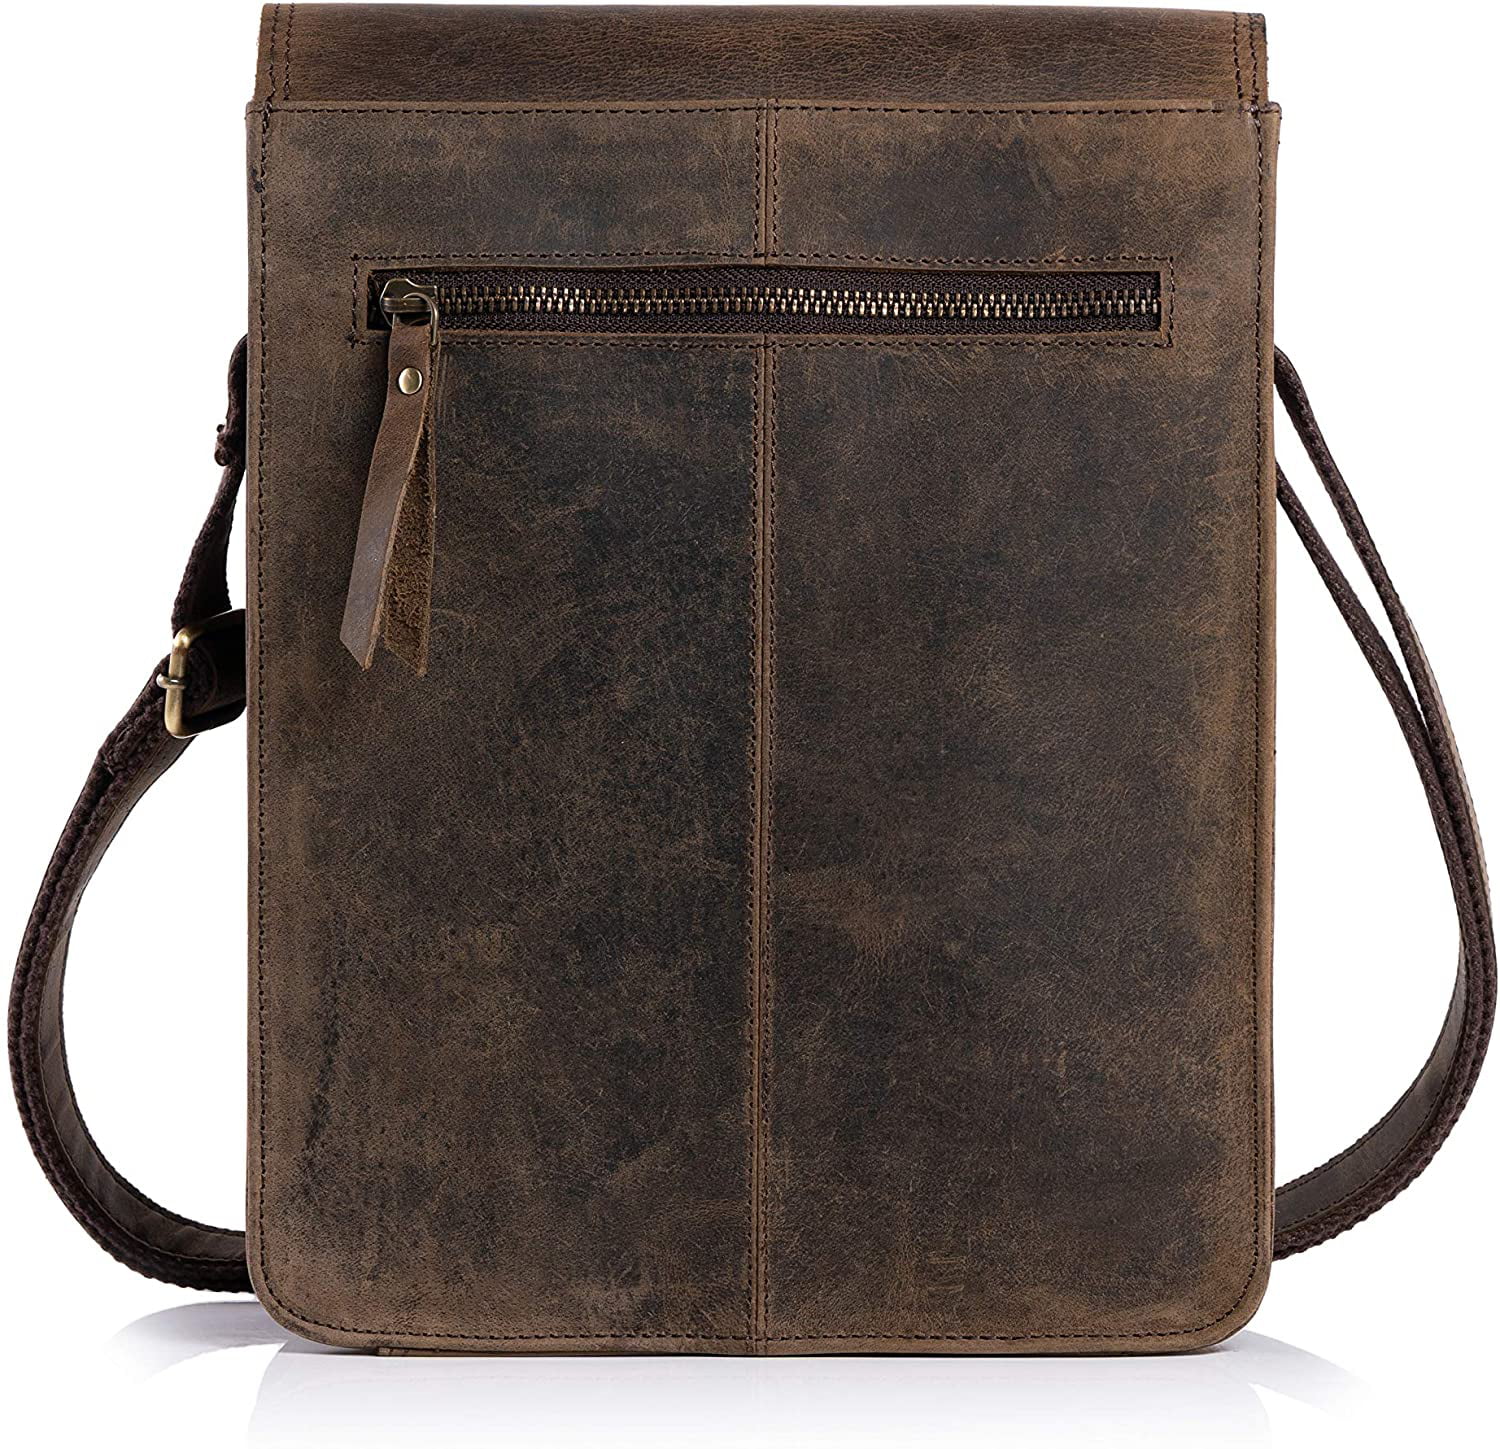 Distressed Tan Pocket Komals Passion Leather 11 Inch Sturdy Leather Ipad Messenger Satchel Bag 